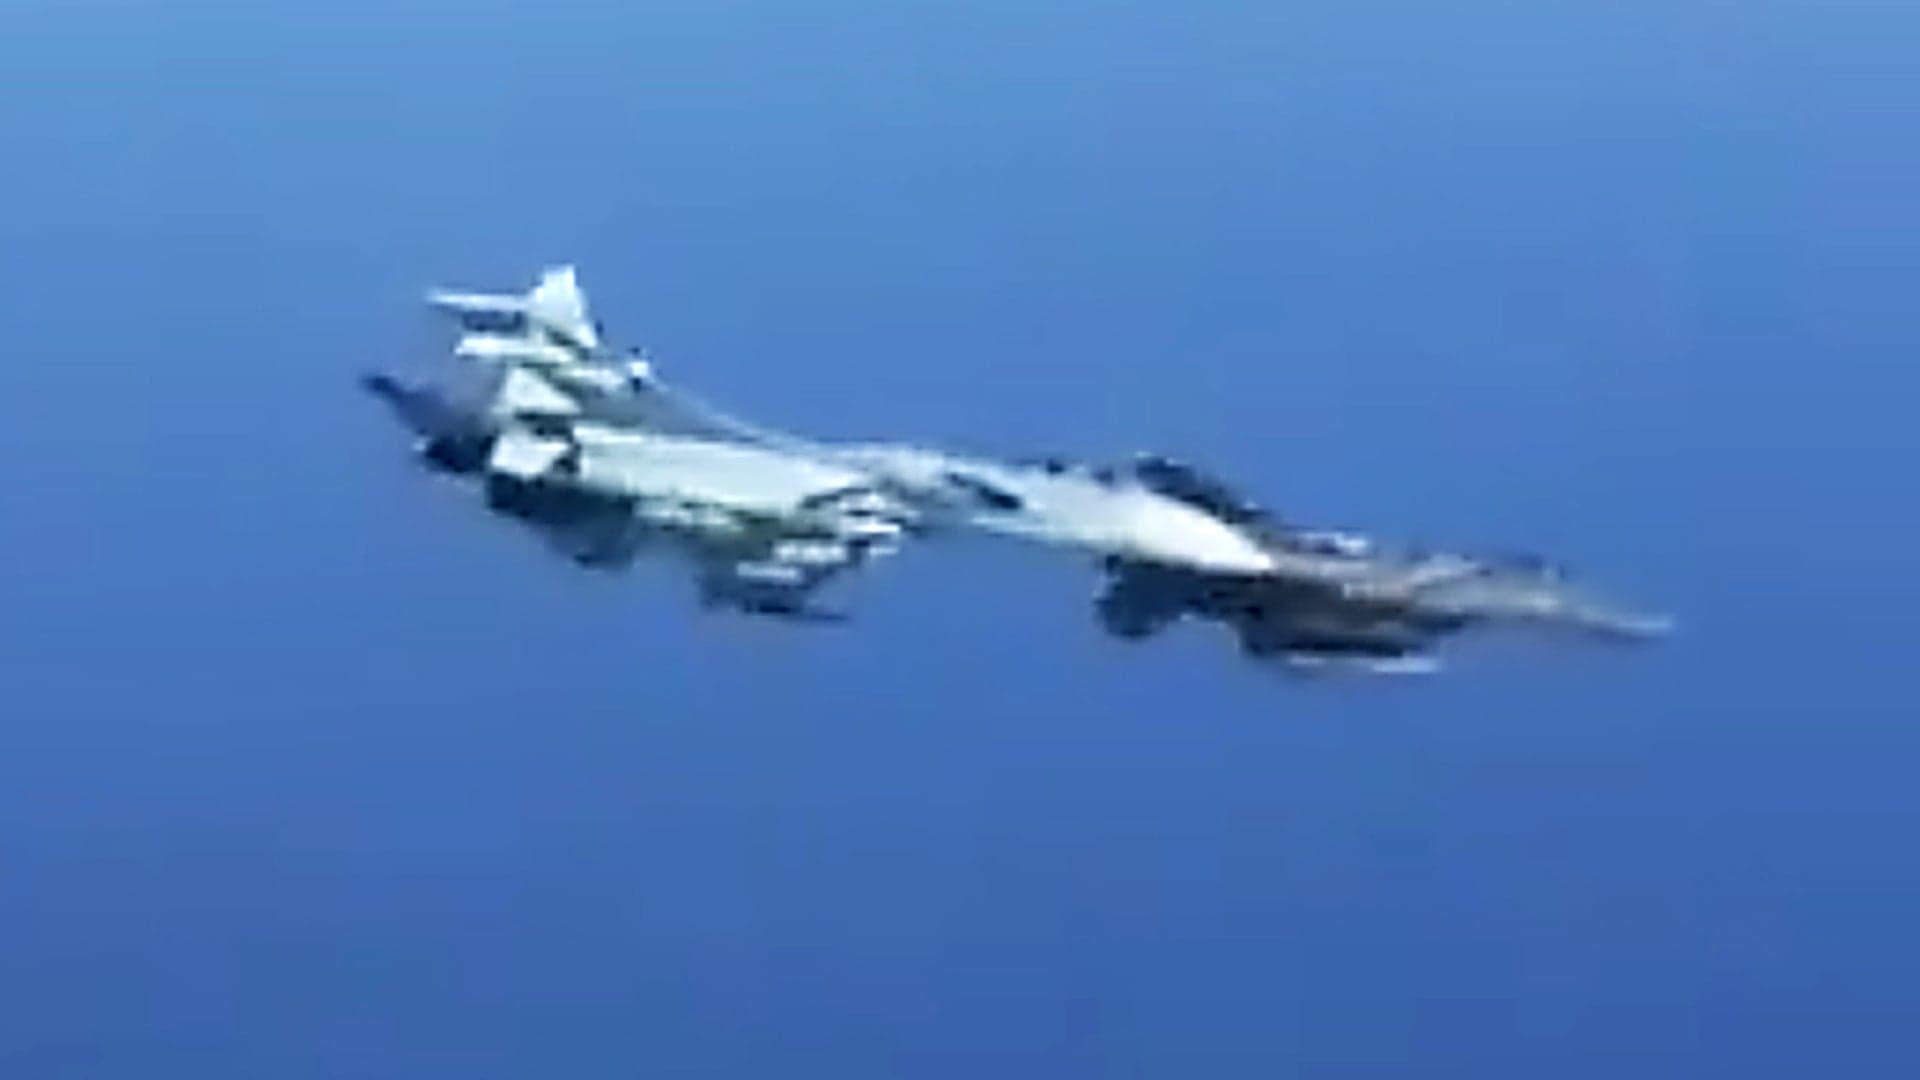 Video Surfaces Of Russian Su-27 Making Aggressive Turn Into U.S. F-15 During Intercept